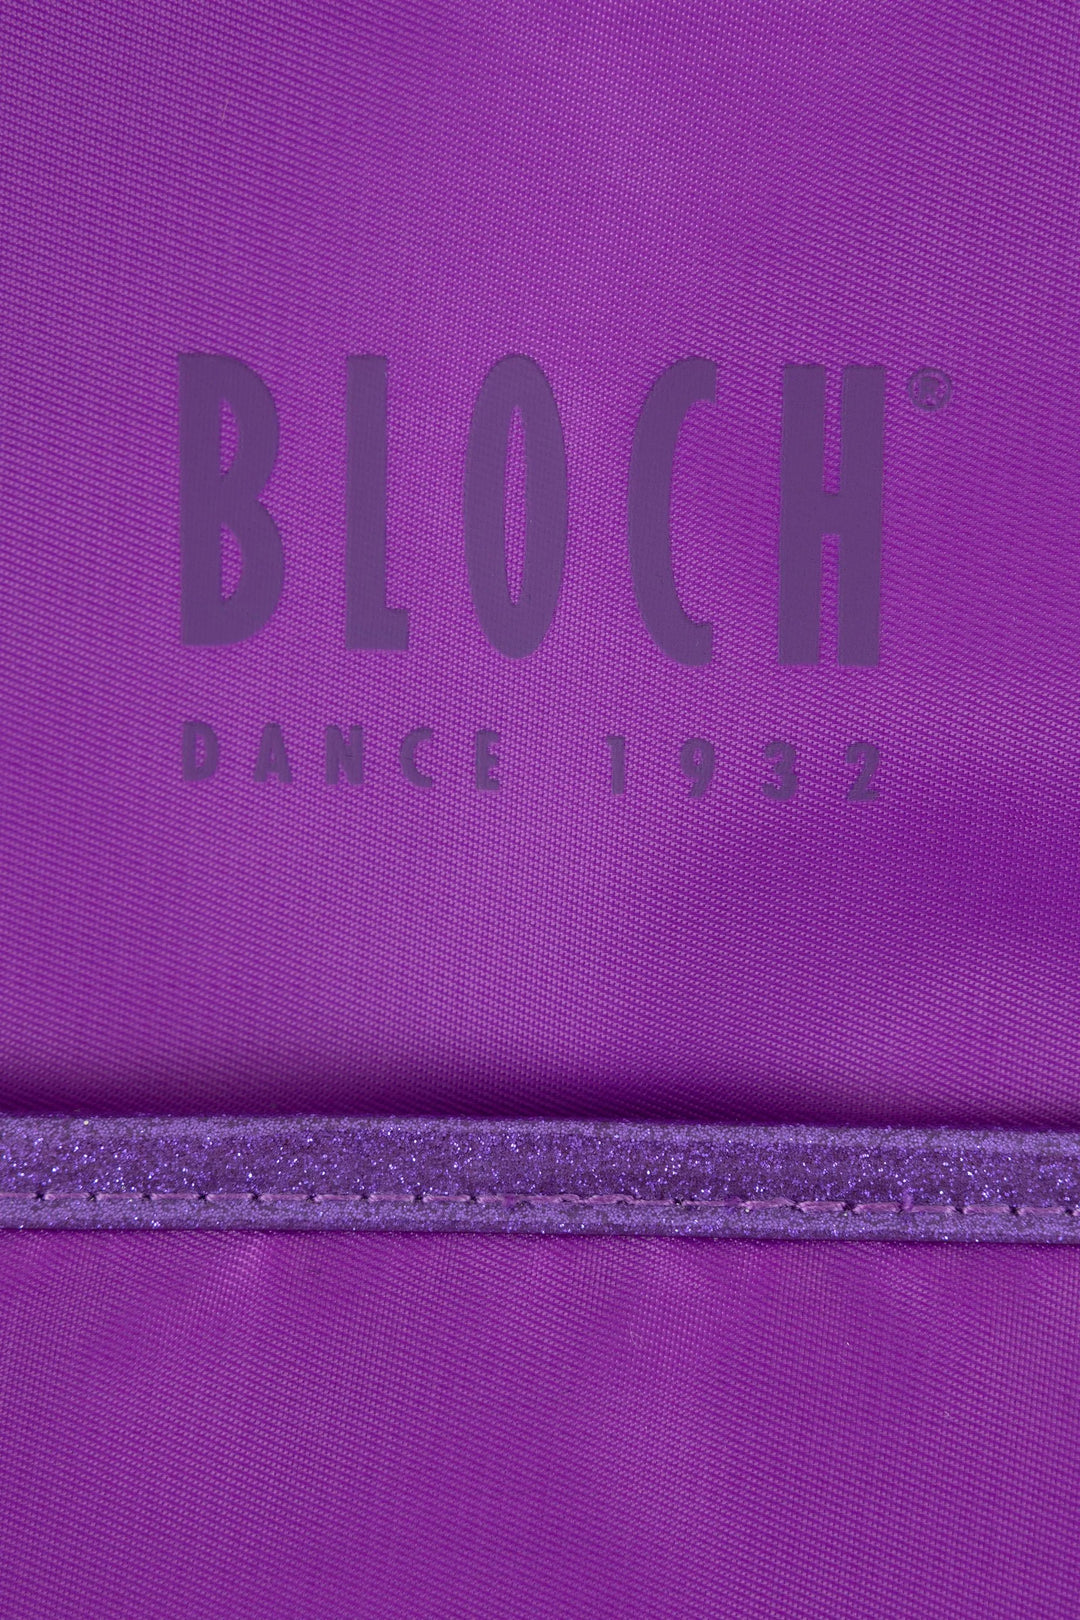 Bloch Recital Dance Bag Purple